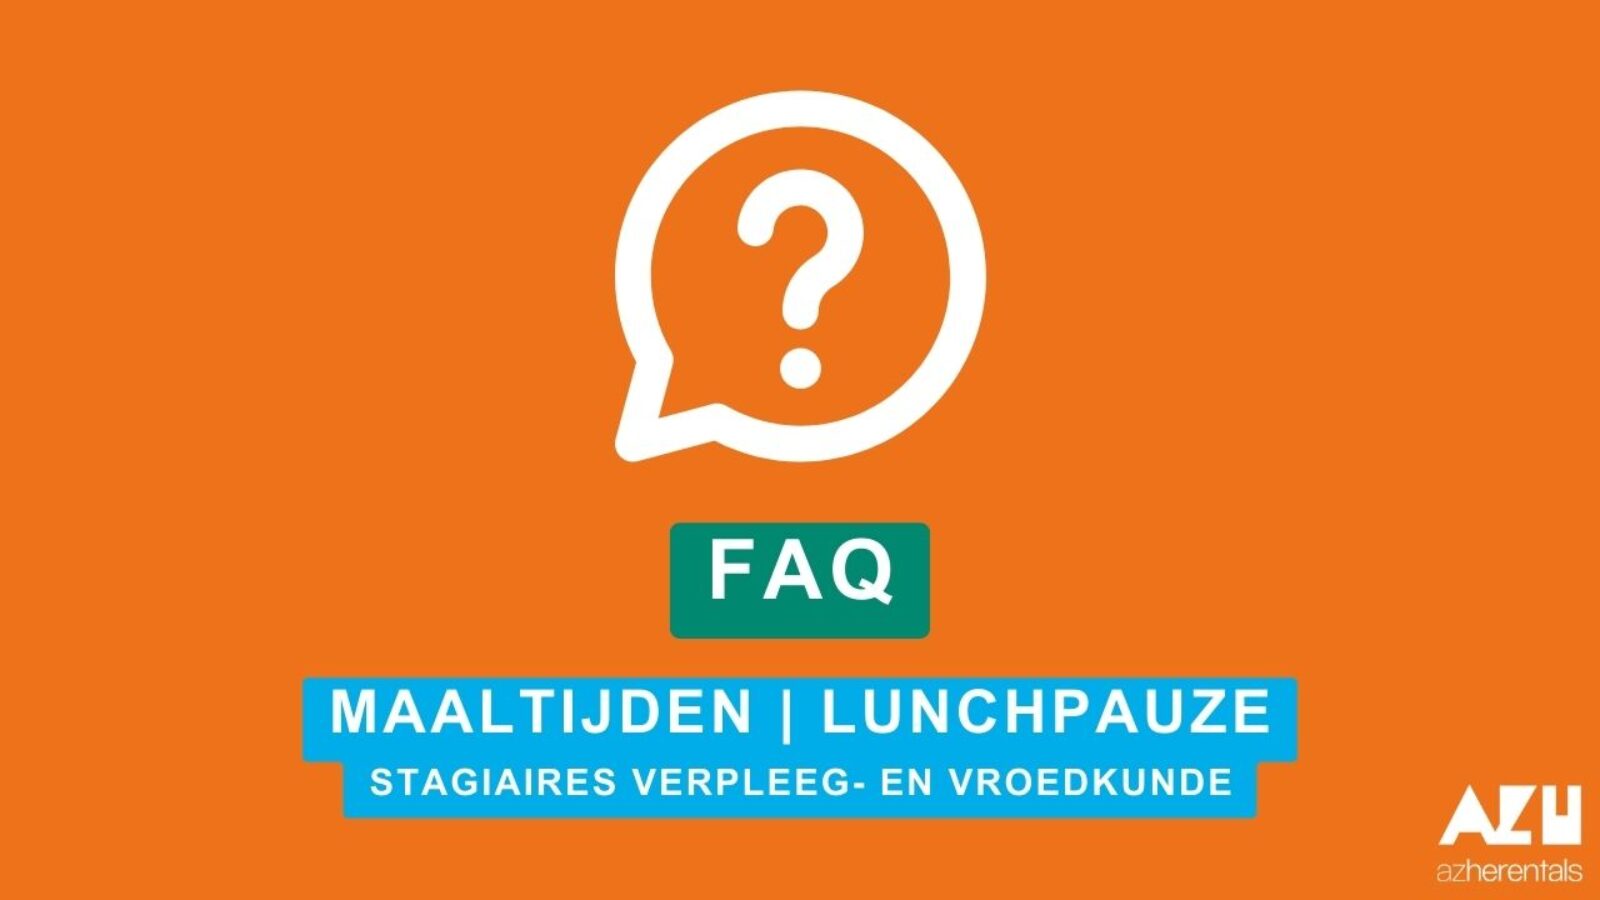 FAQ Maaltijden & Lunchpauze